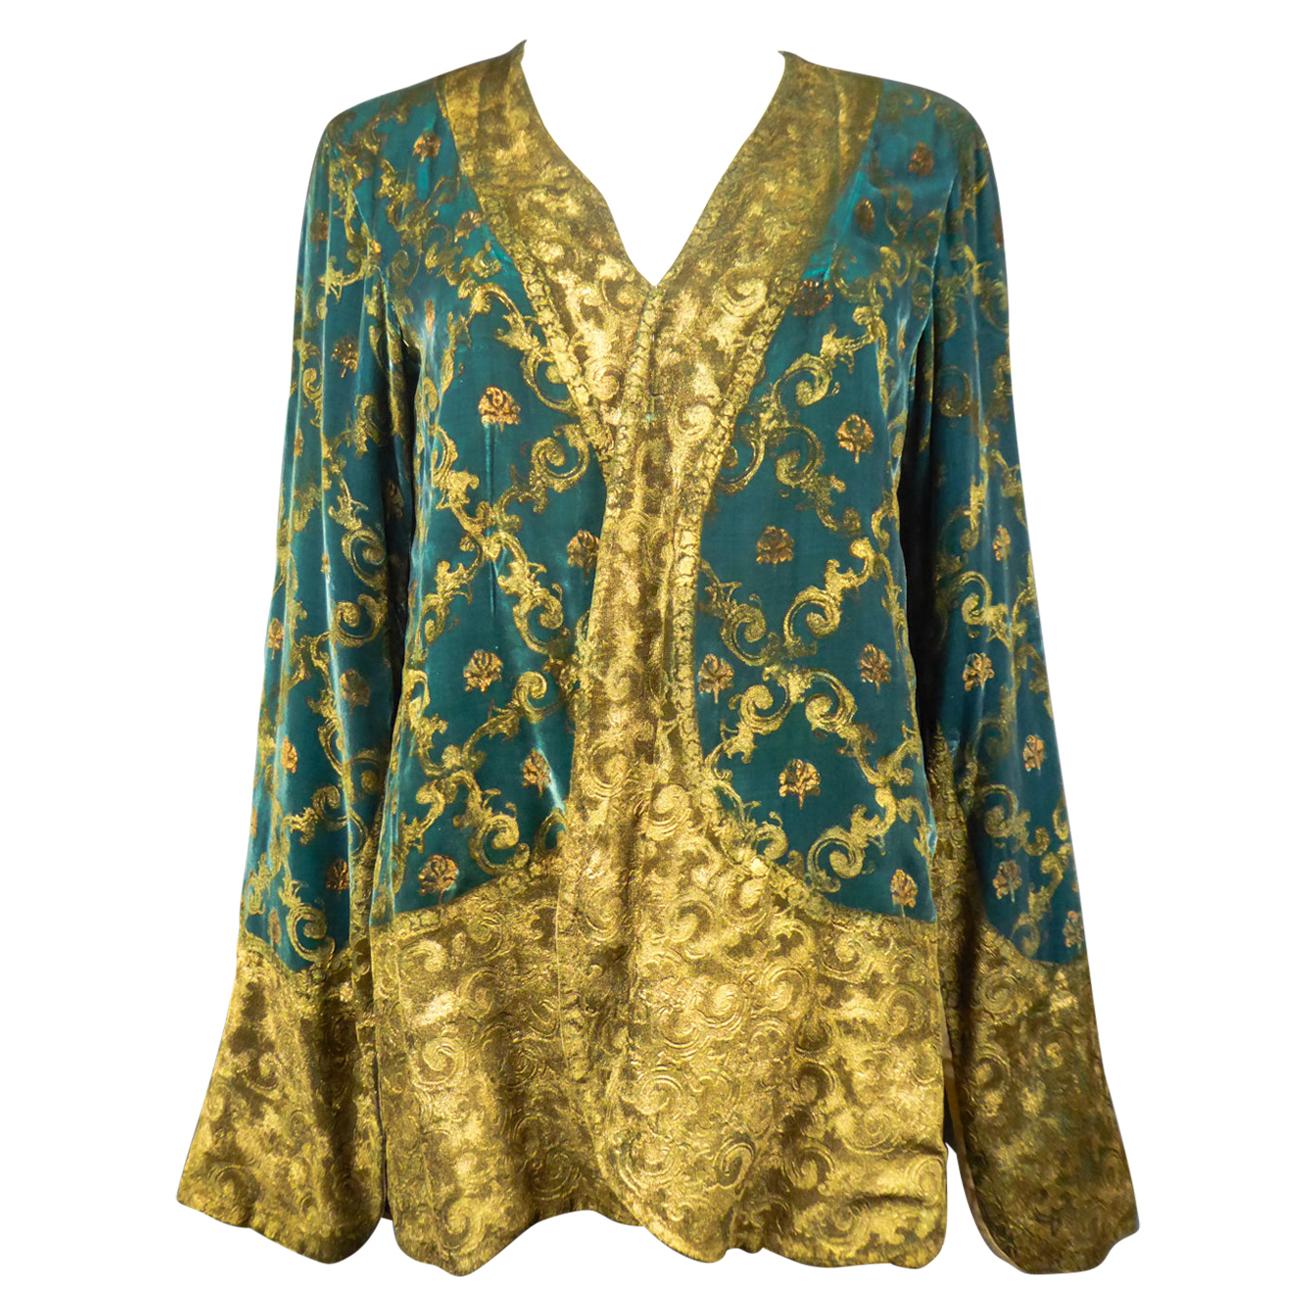 Maria Monacci Gallenga Evening Jacket in Gold Painted Velvet Circa 1930